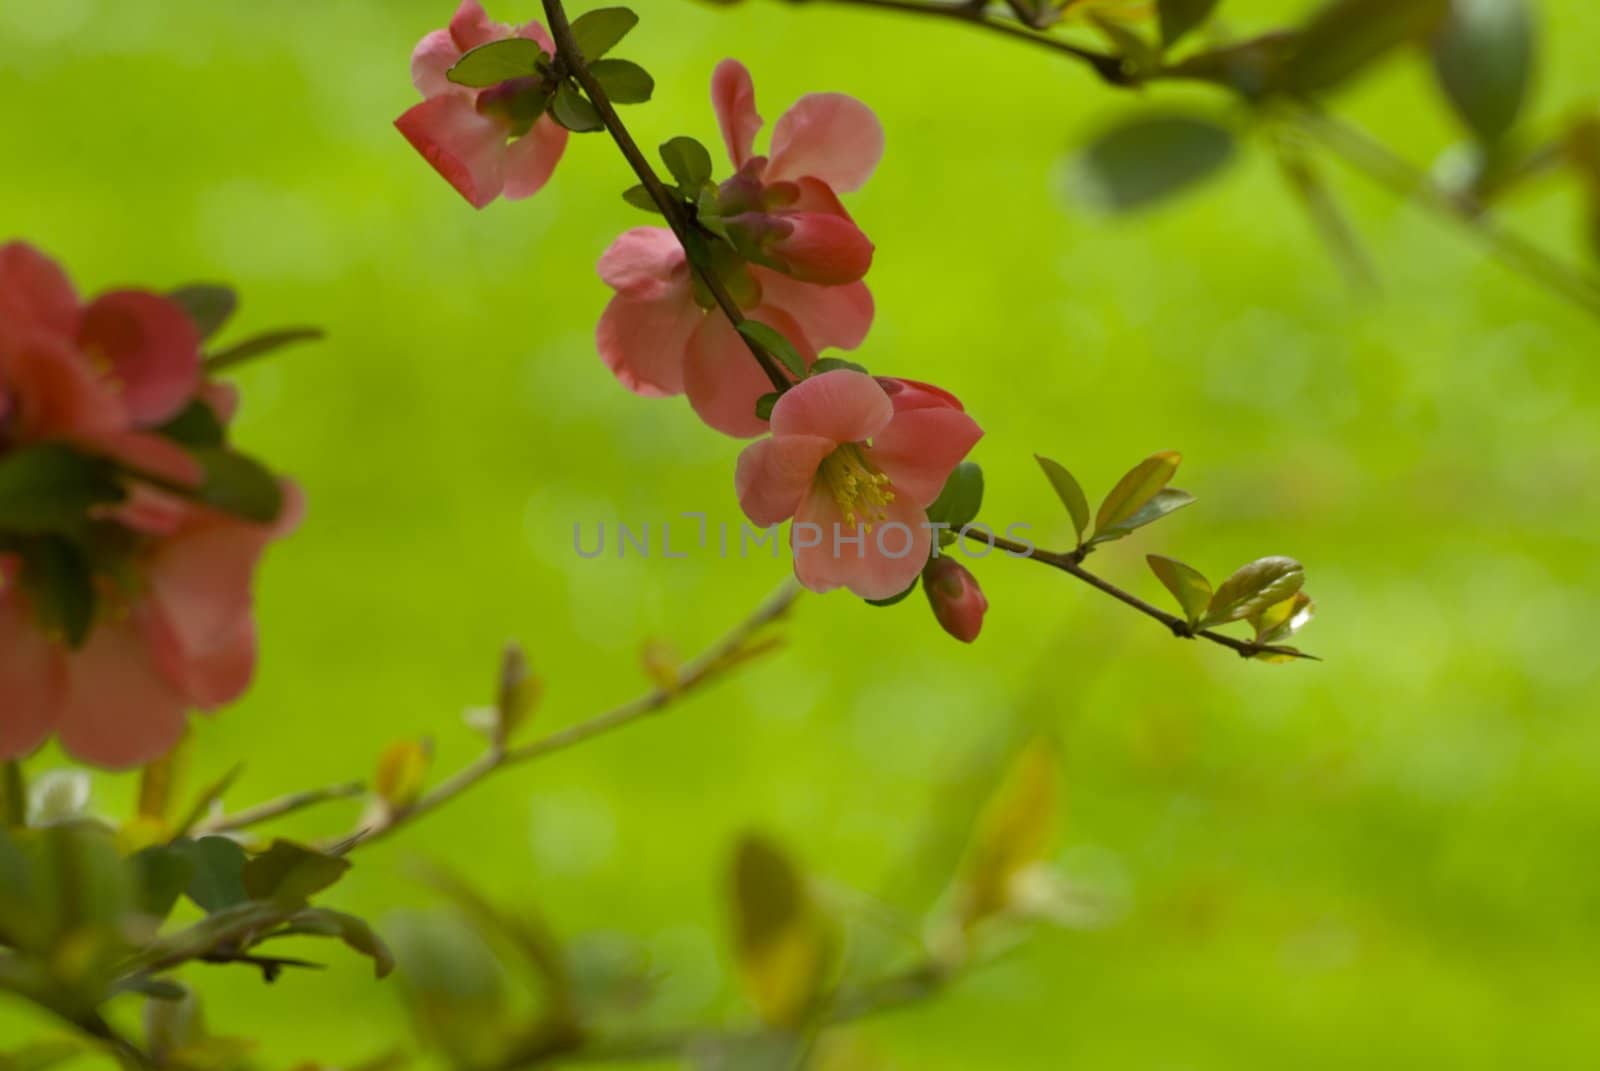 A fresh sprig of pink spring cherry blossom